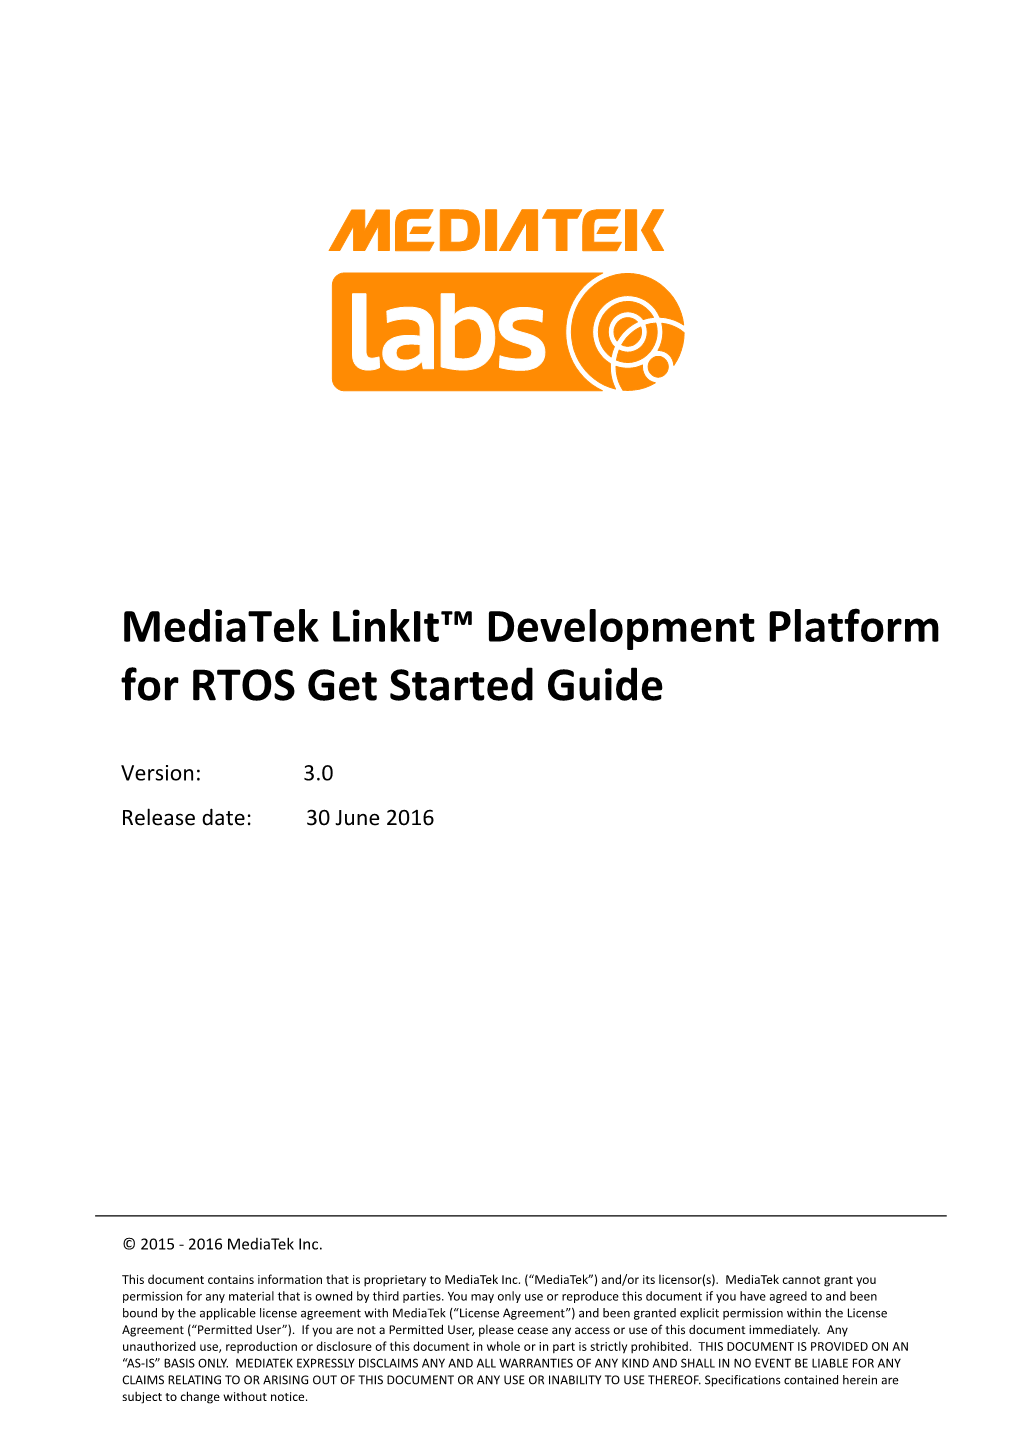 Mediatek Linkit™ Development Platform for RTOS Get Started Guide